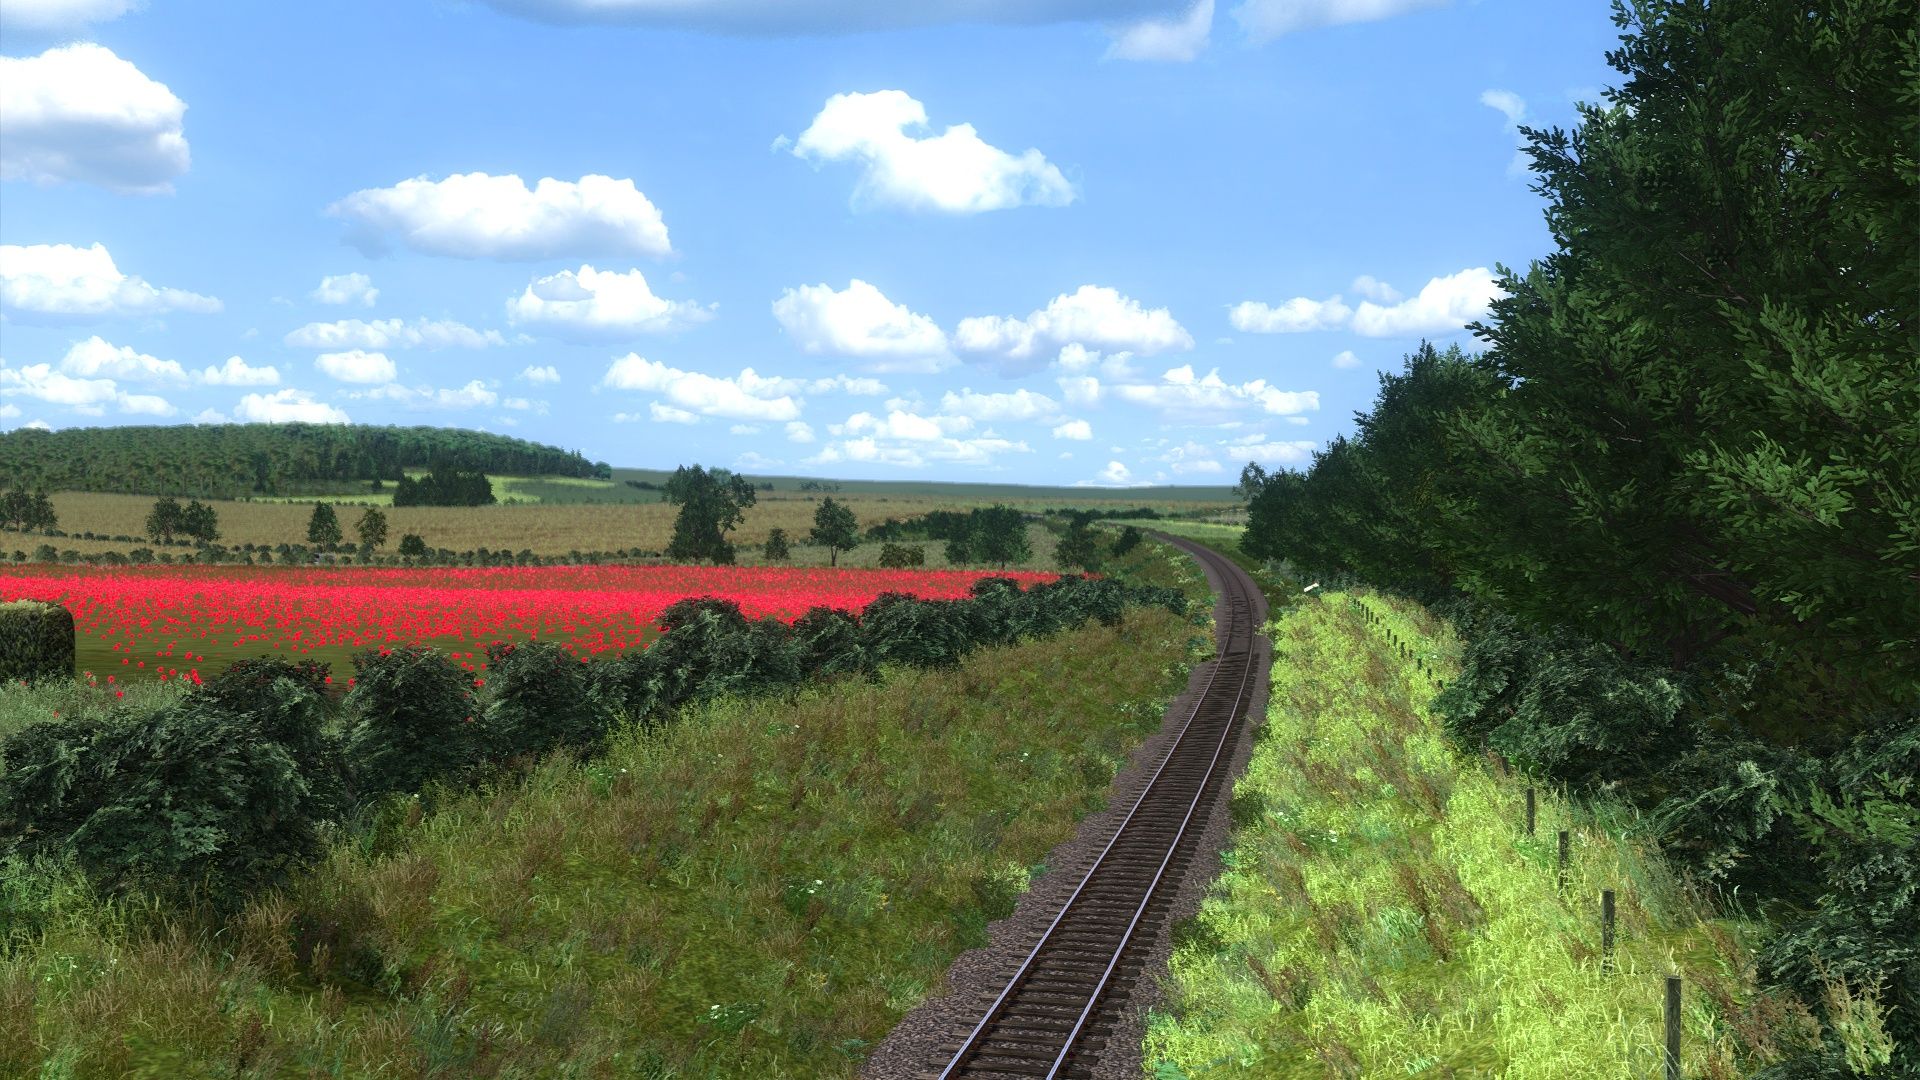 Screenshot_The North Norfolk  Railway - The Poppy Line_52.94302-1.16955_12-09-13.jpg